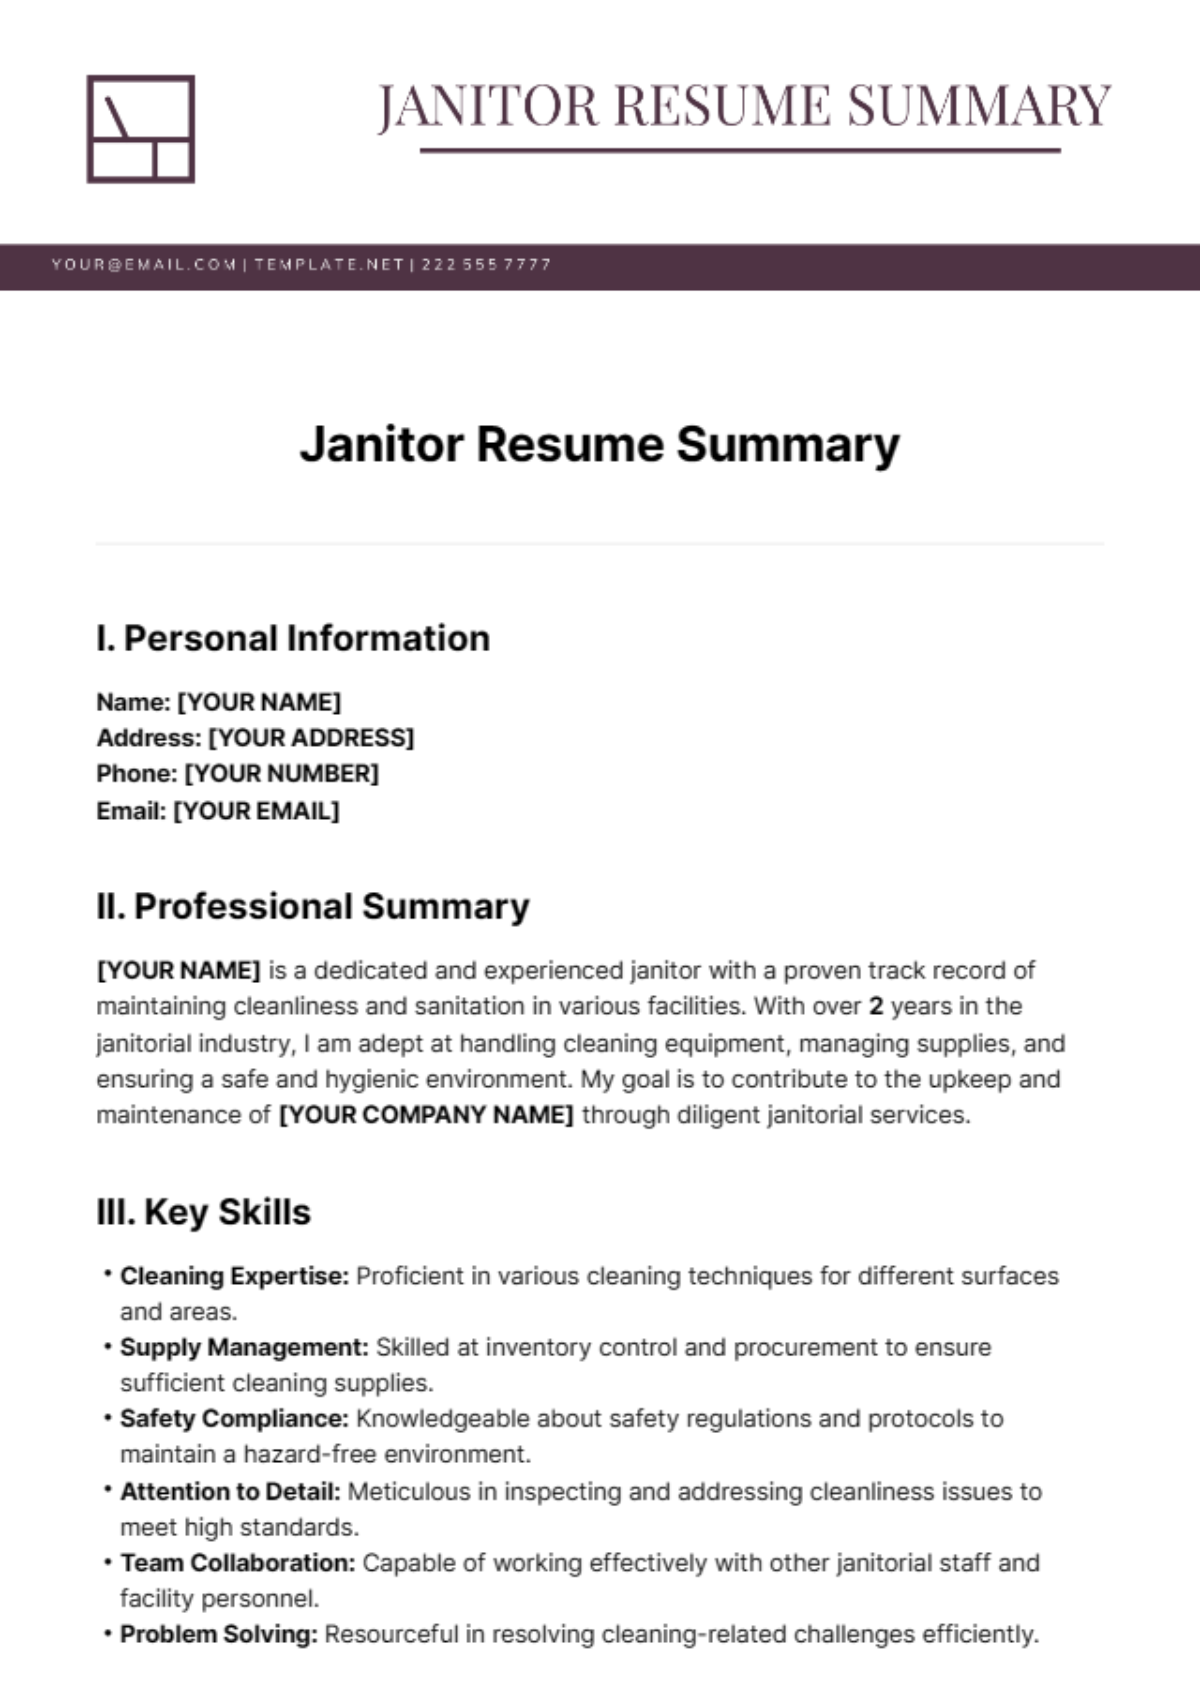 Free Janitor Resume Summary Template